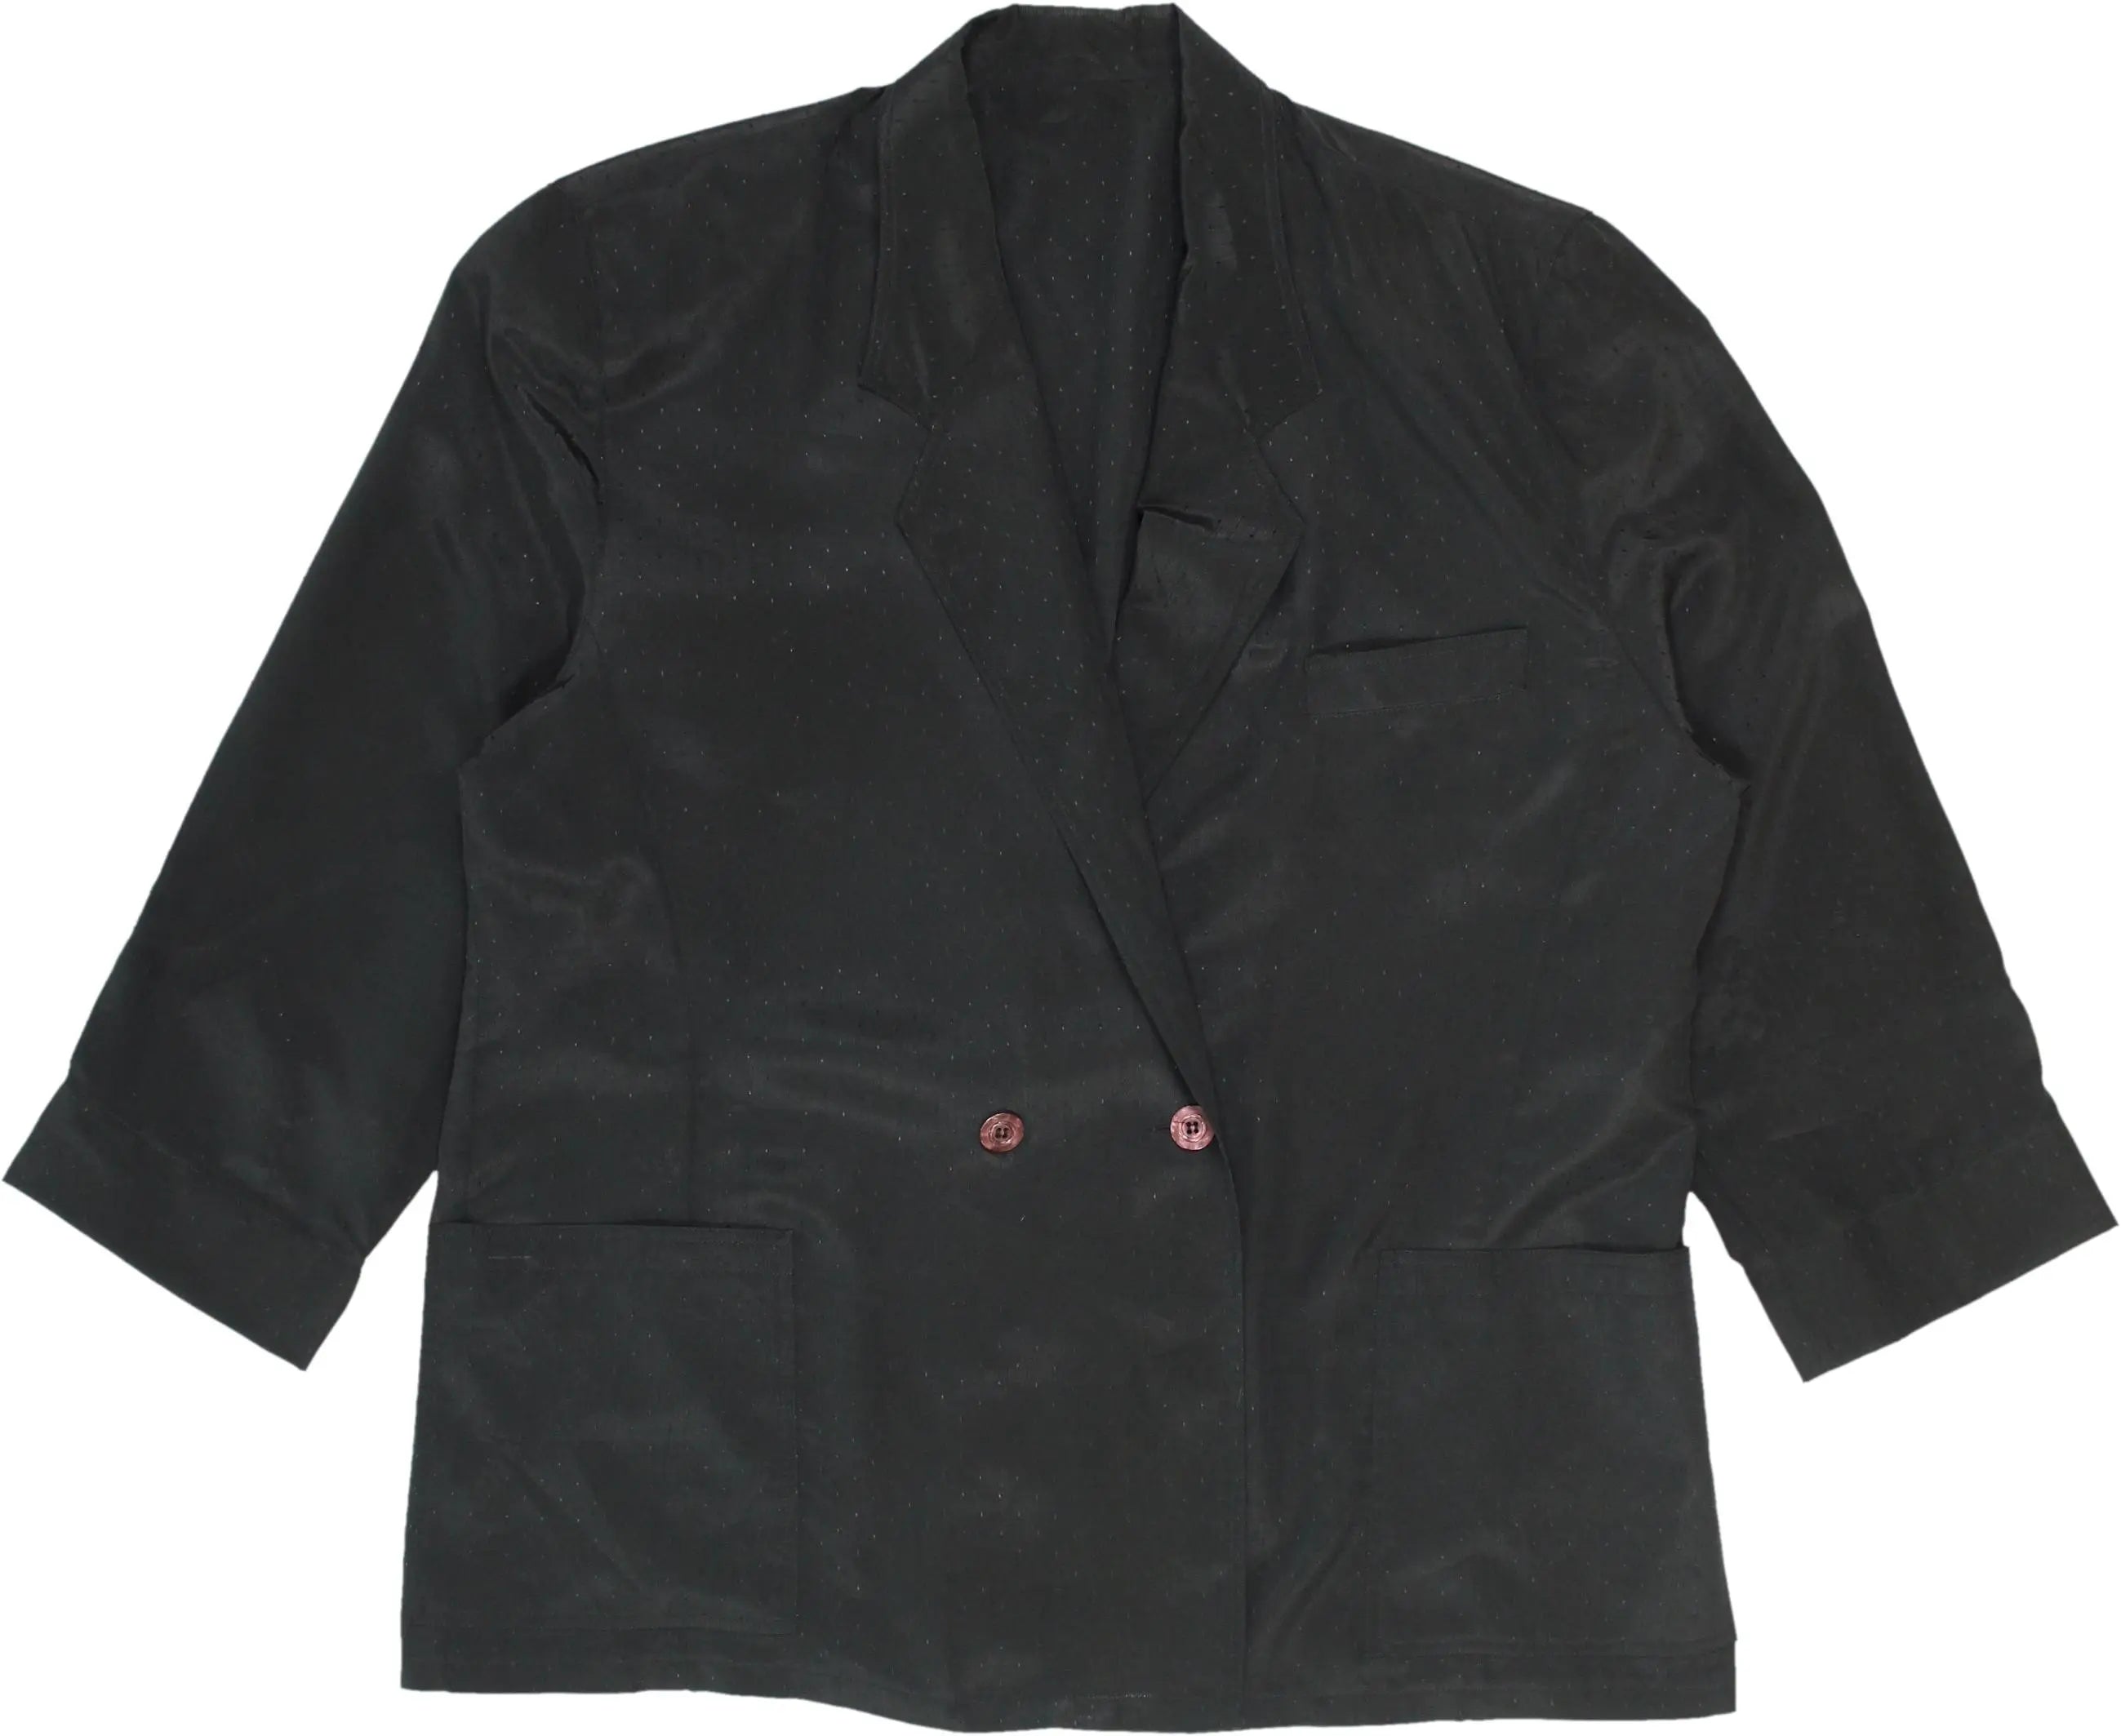 Unknown - Vintage Black Blazer- ThriftTale.com - Vintage and second handclothing